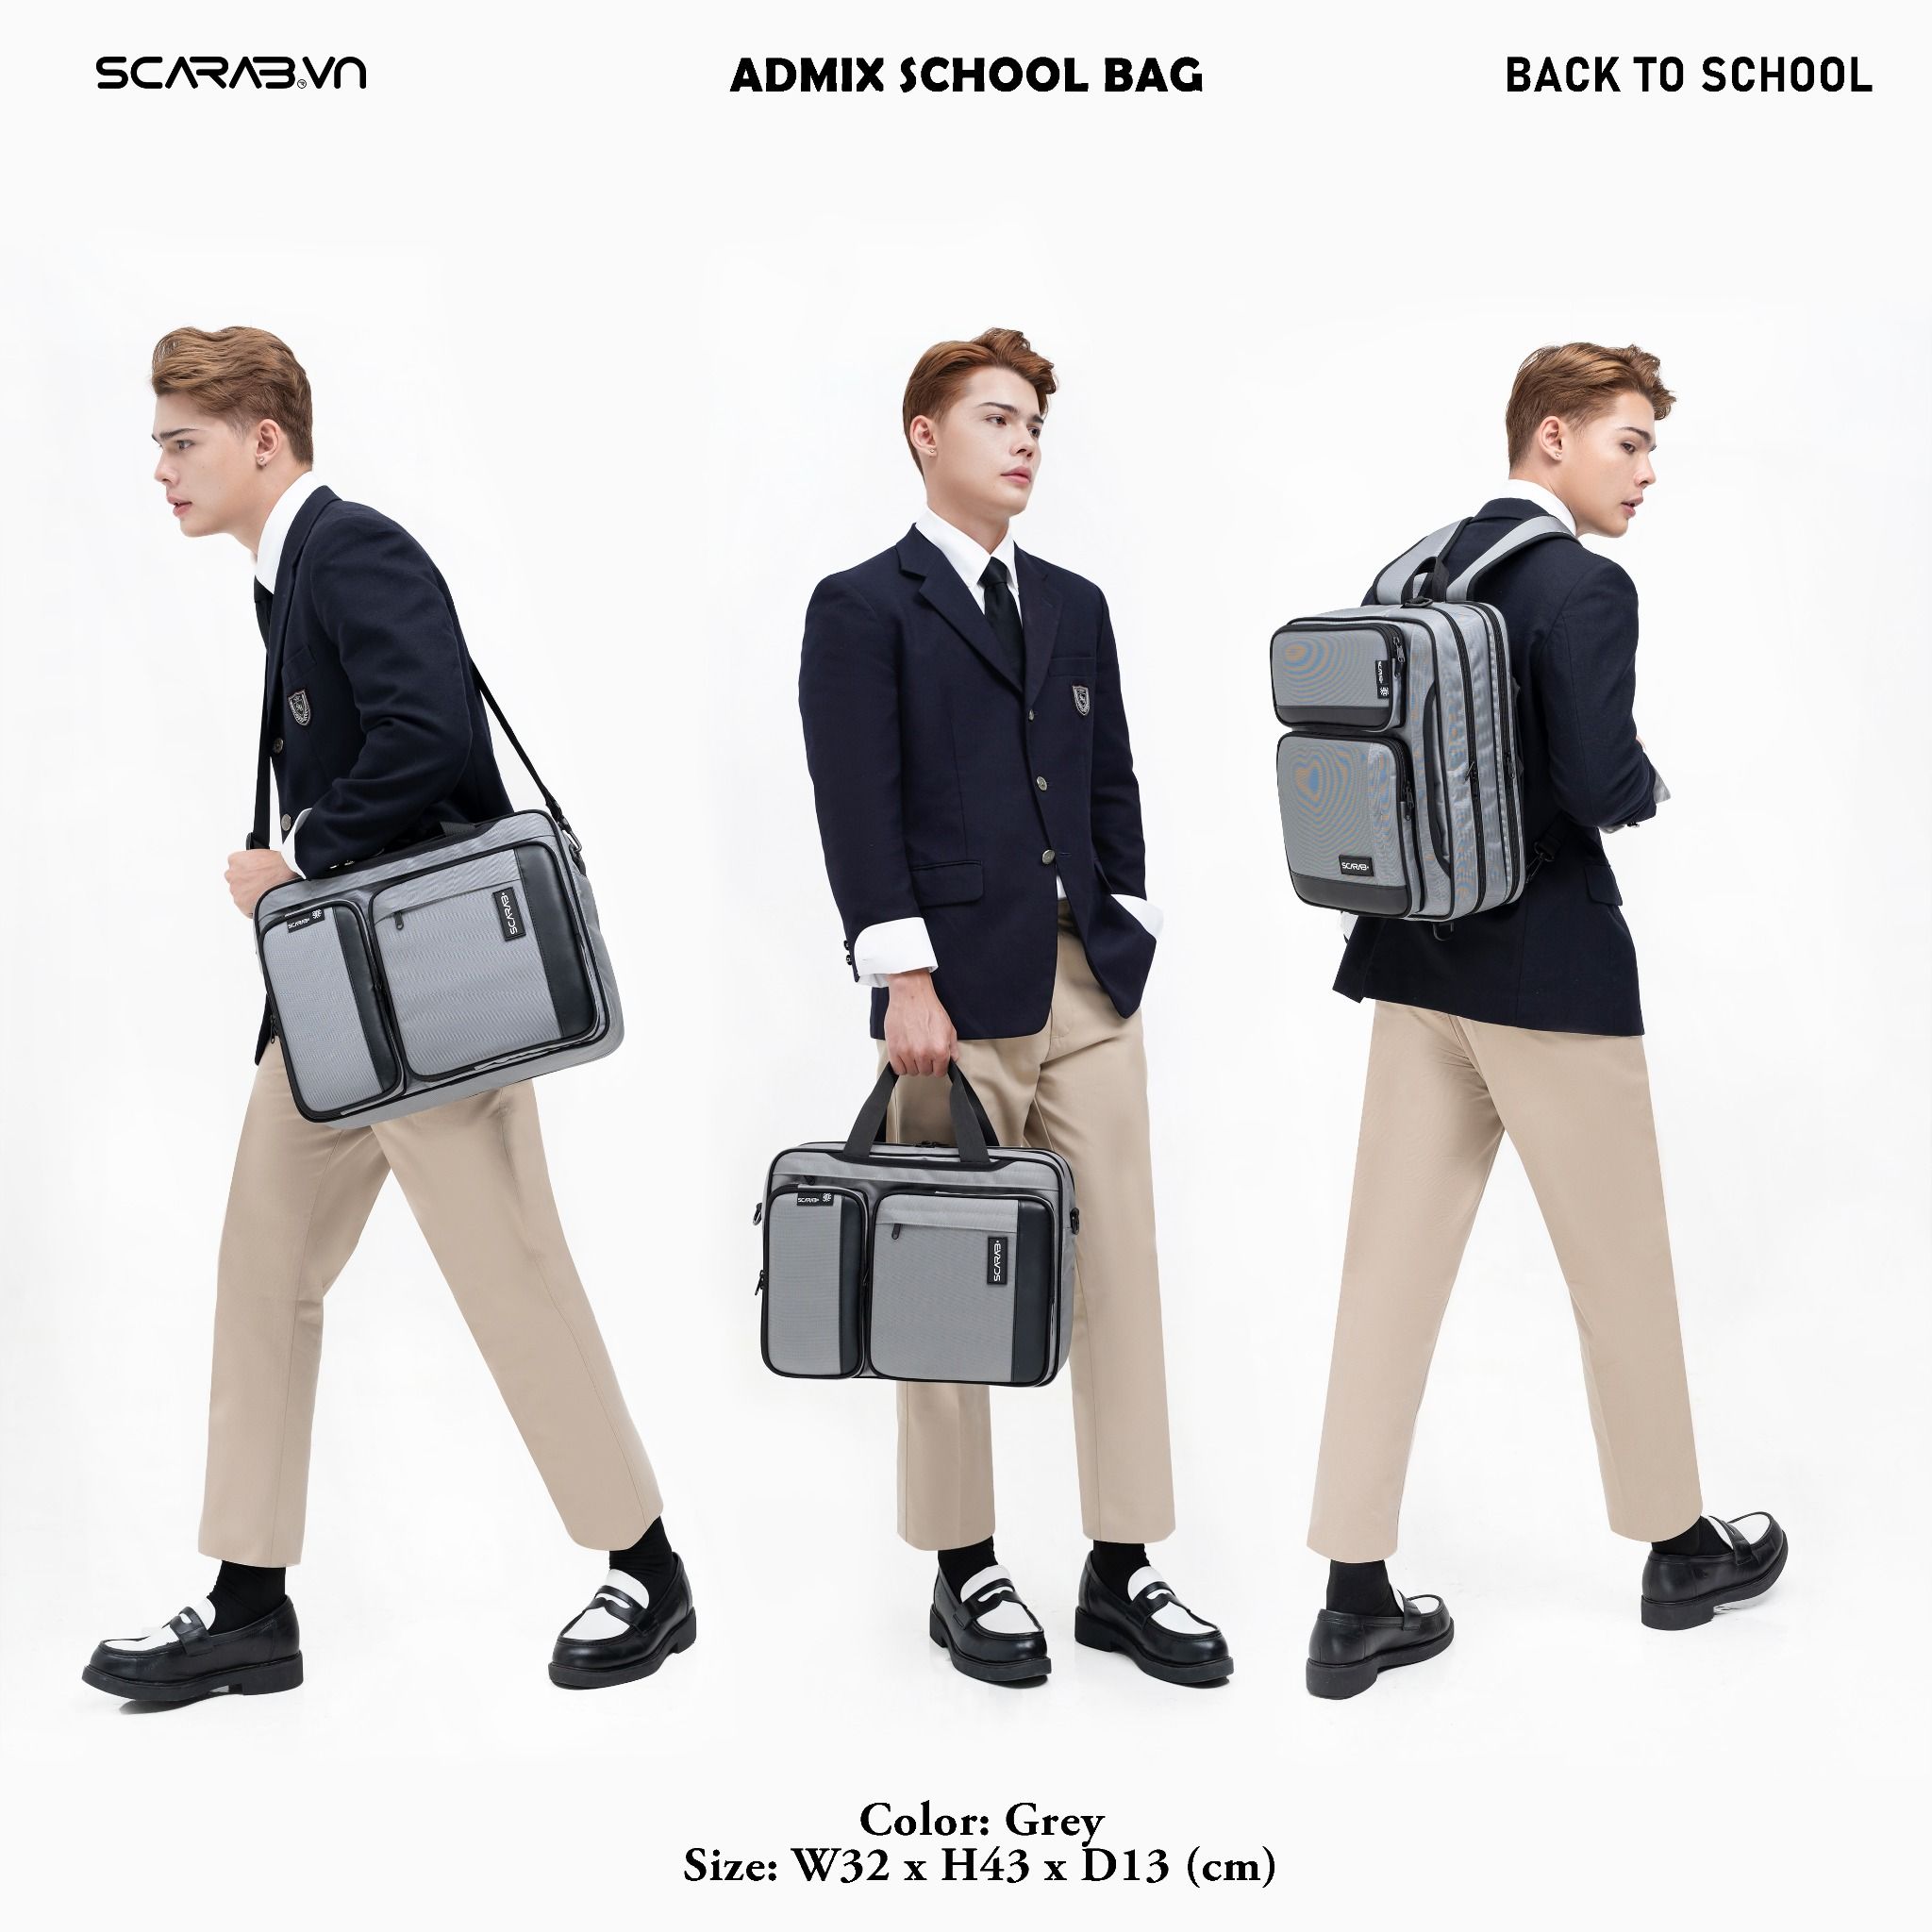  Admix School Bag -  Grey 